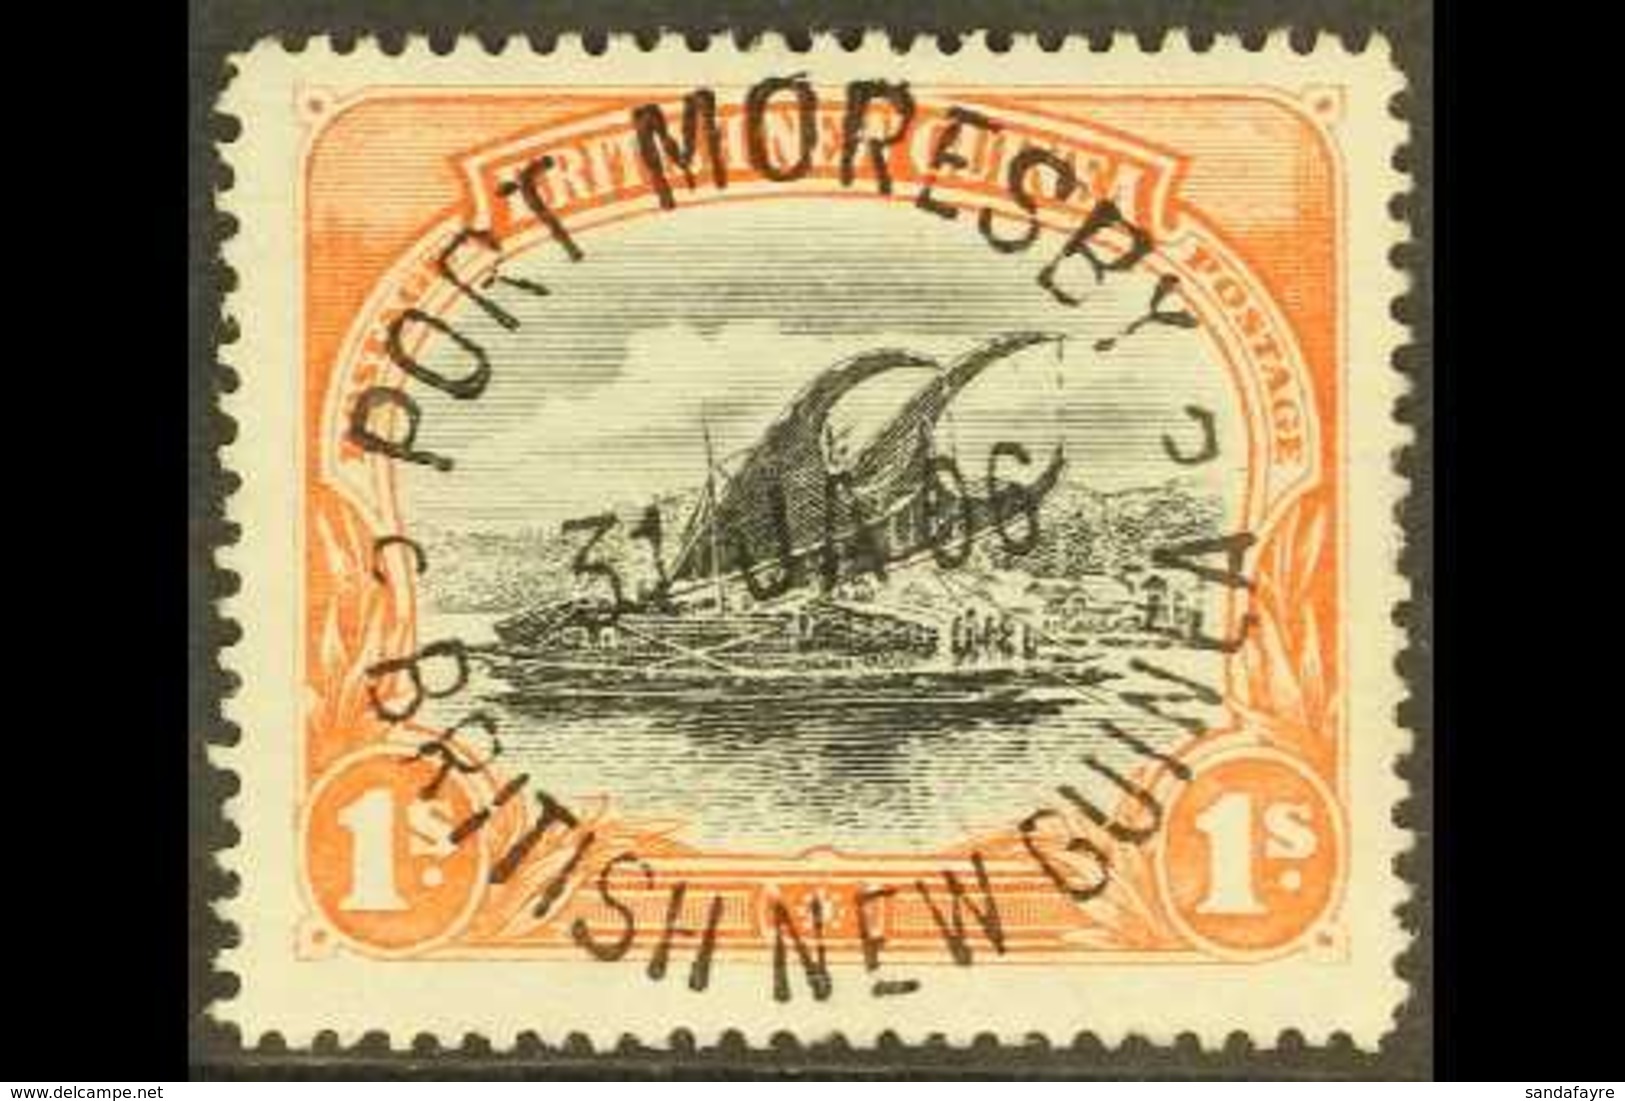 1901-05 1s Black And Orange Lakatoi, SG 7, Superb Full Upright Port Moresby 31 Jan 1906 Cds. For More Images, Please Vis - Papua New Guinea